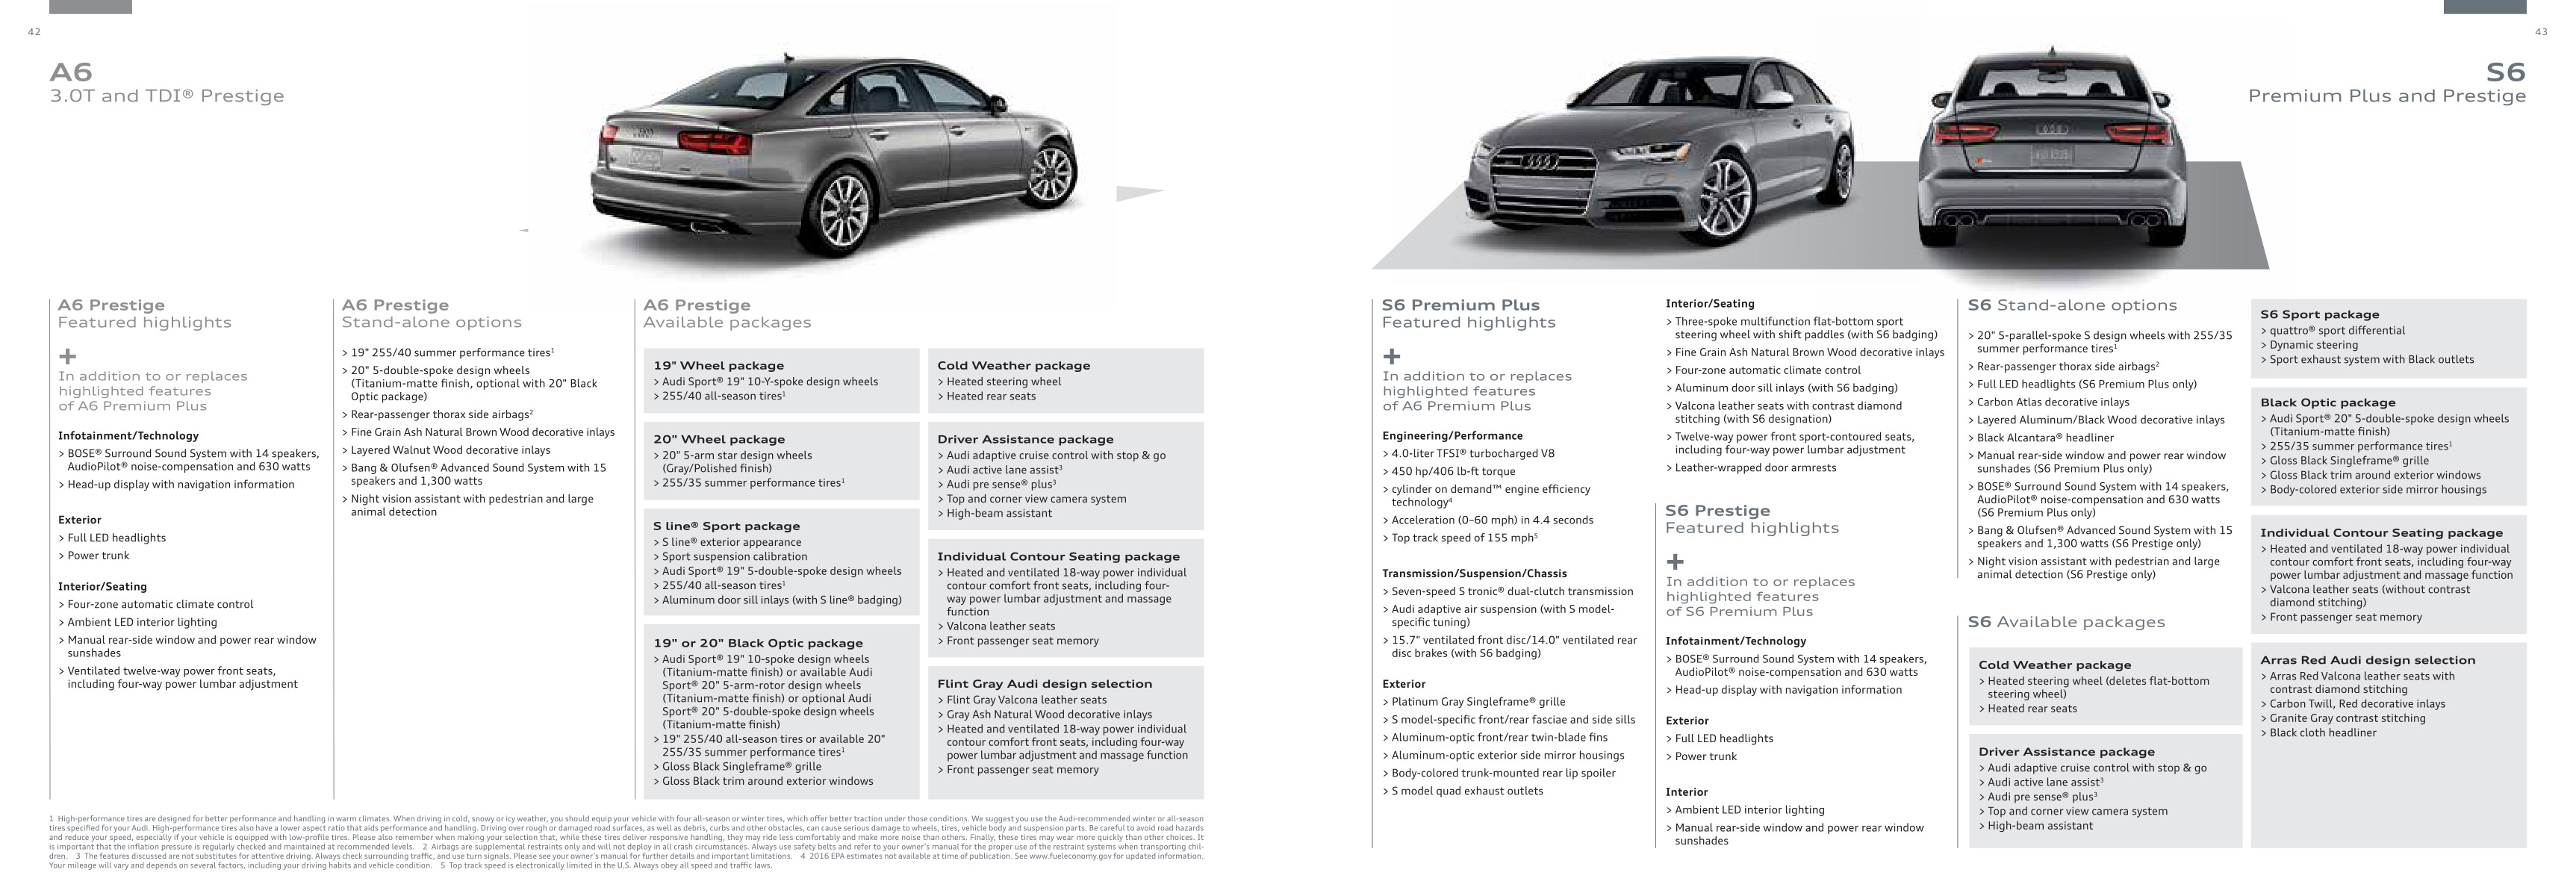 2016 Audi A6 Brochure Page 5